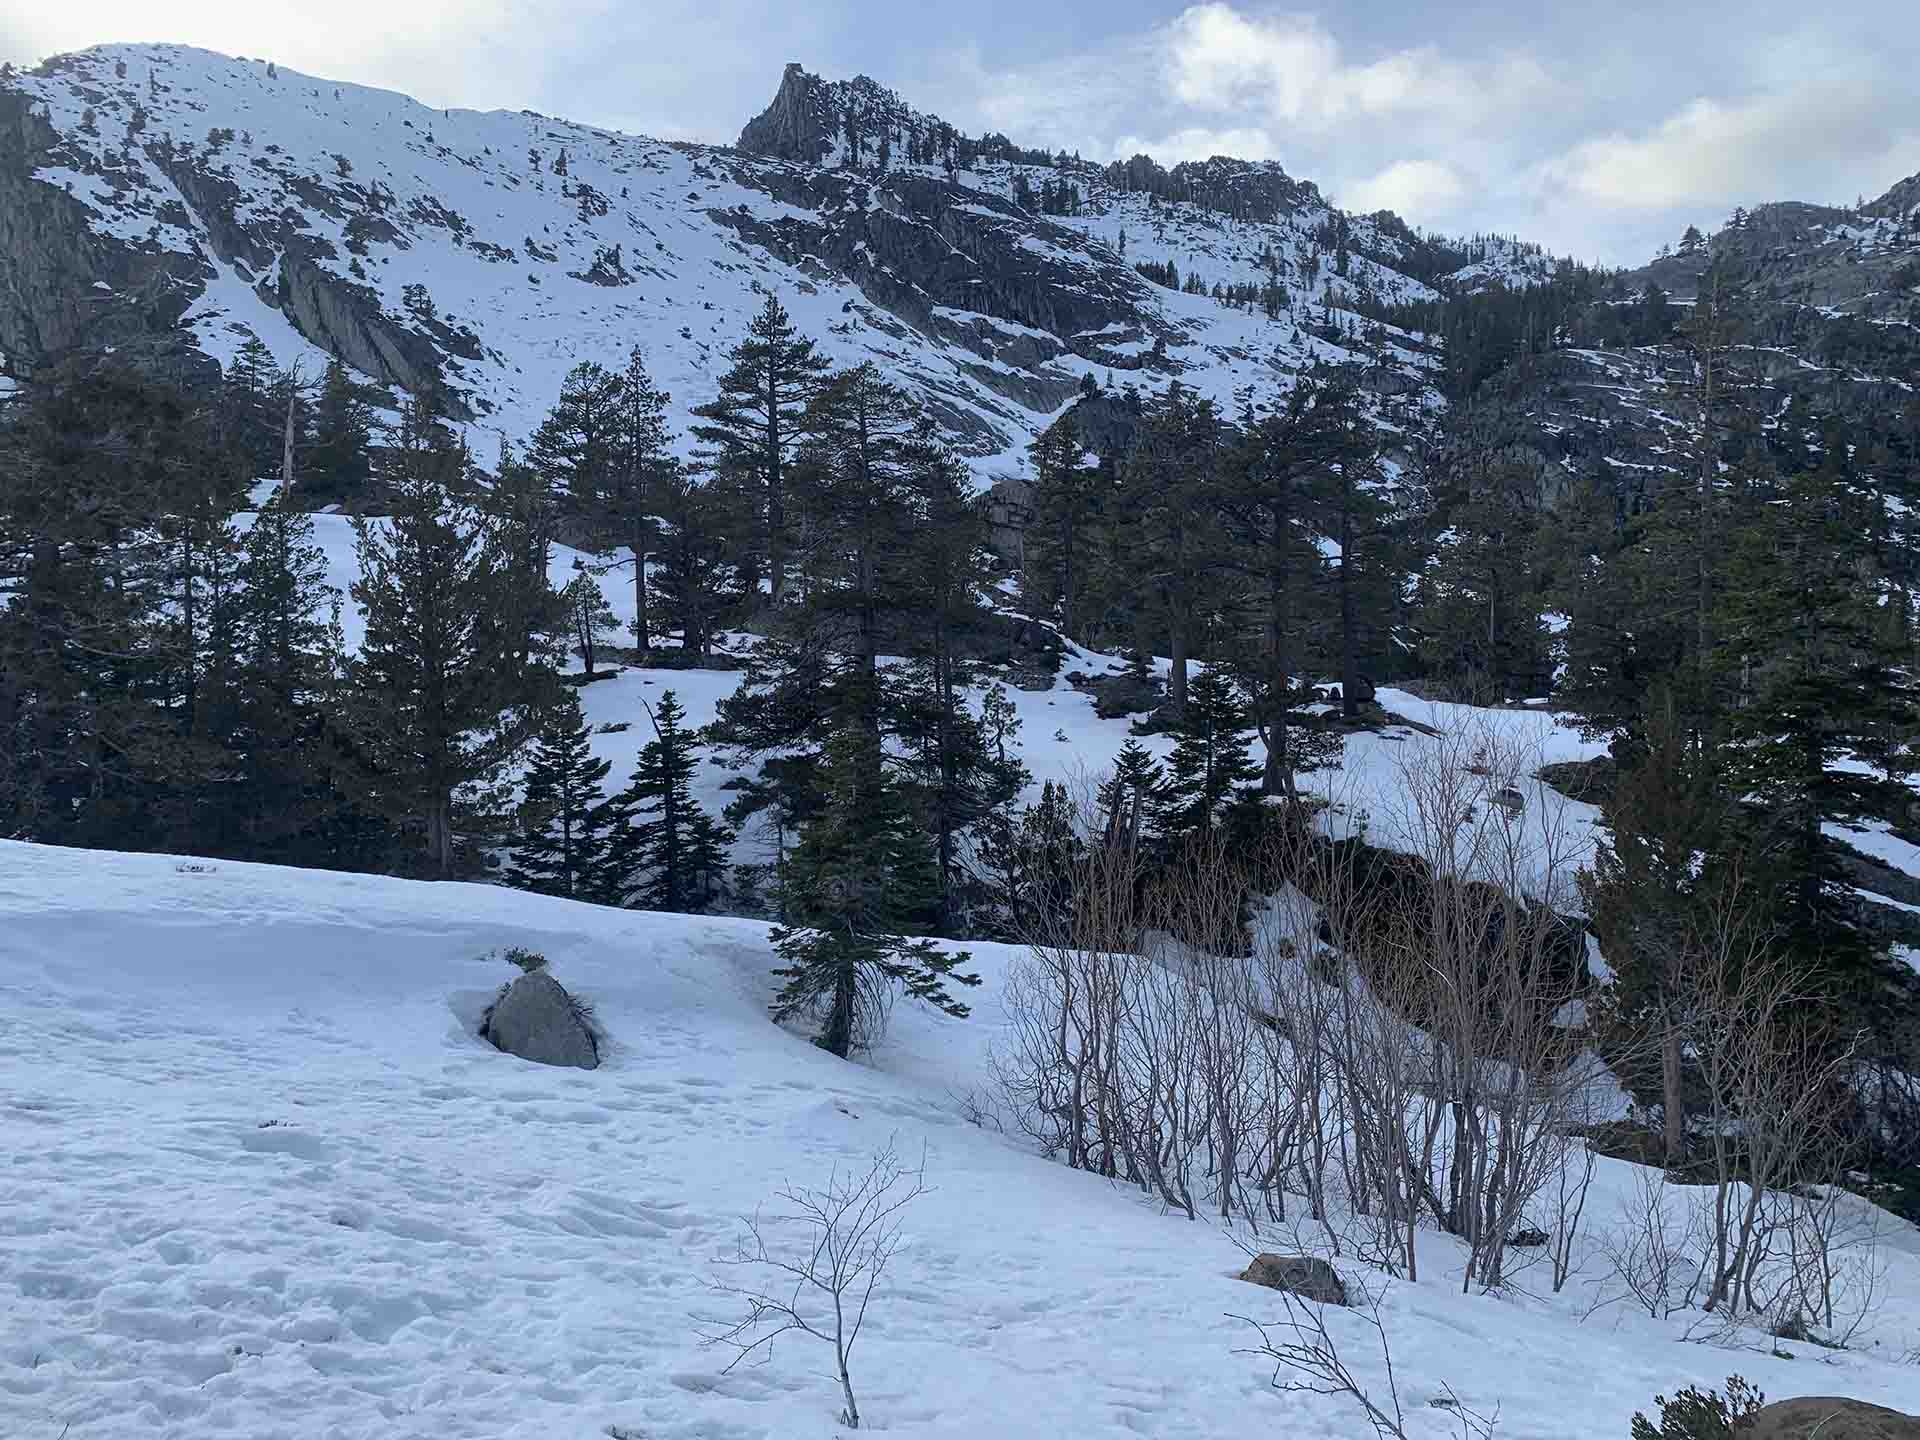 Frozen Eagle Lake Trail, some random photographs 4